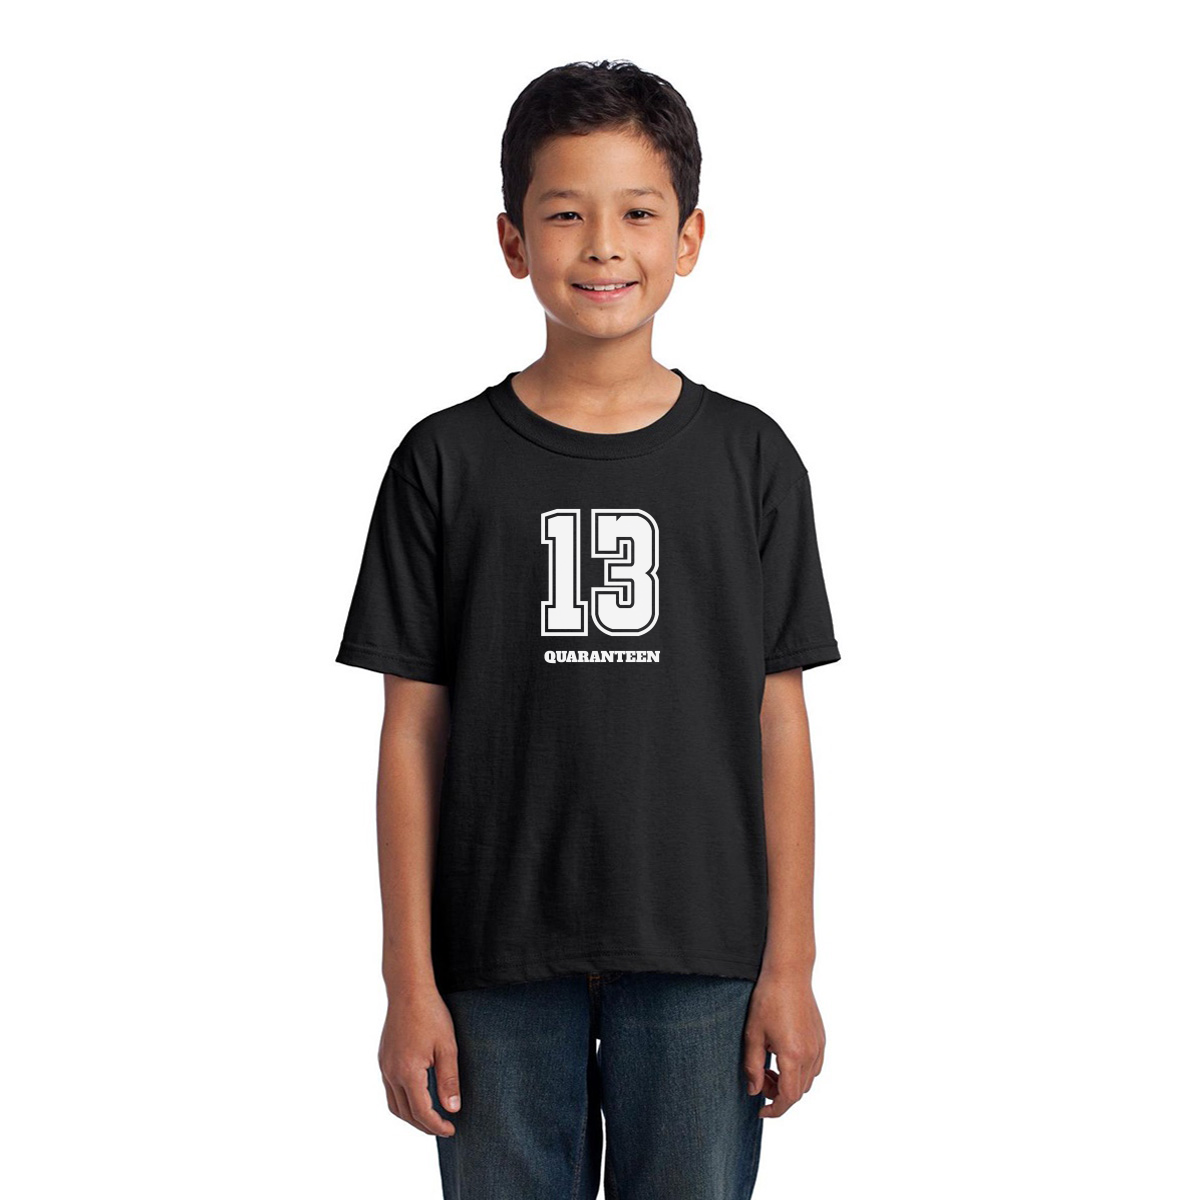 13 QUARANTEEN Kids T-shirt | Black